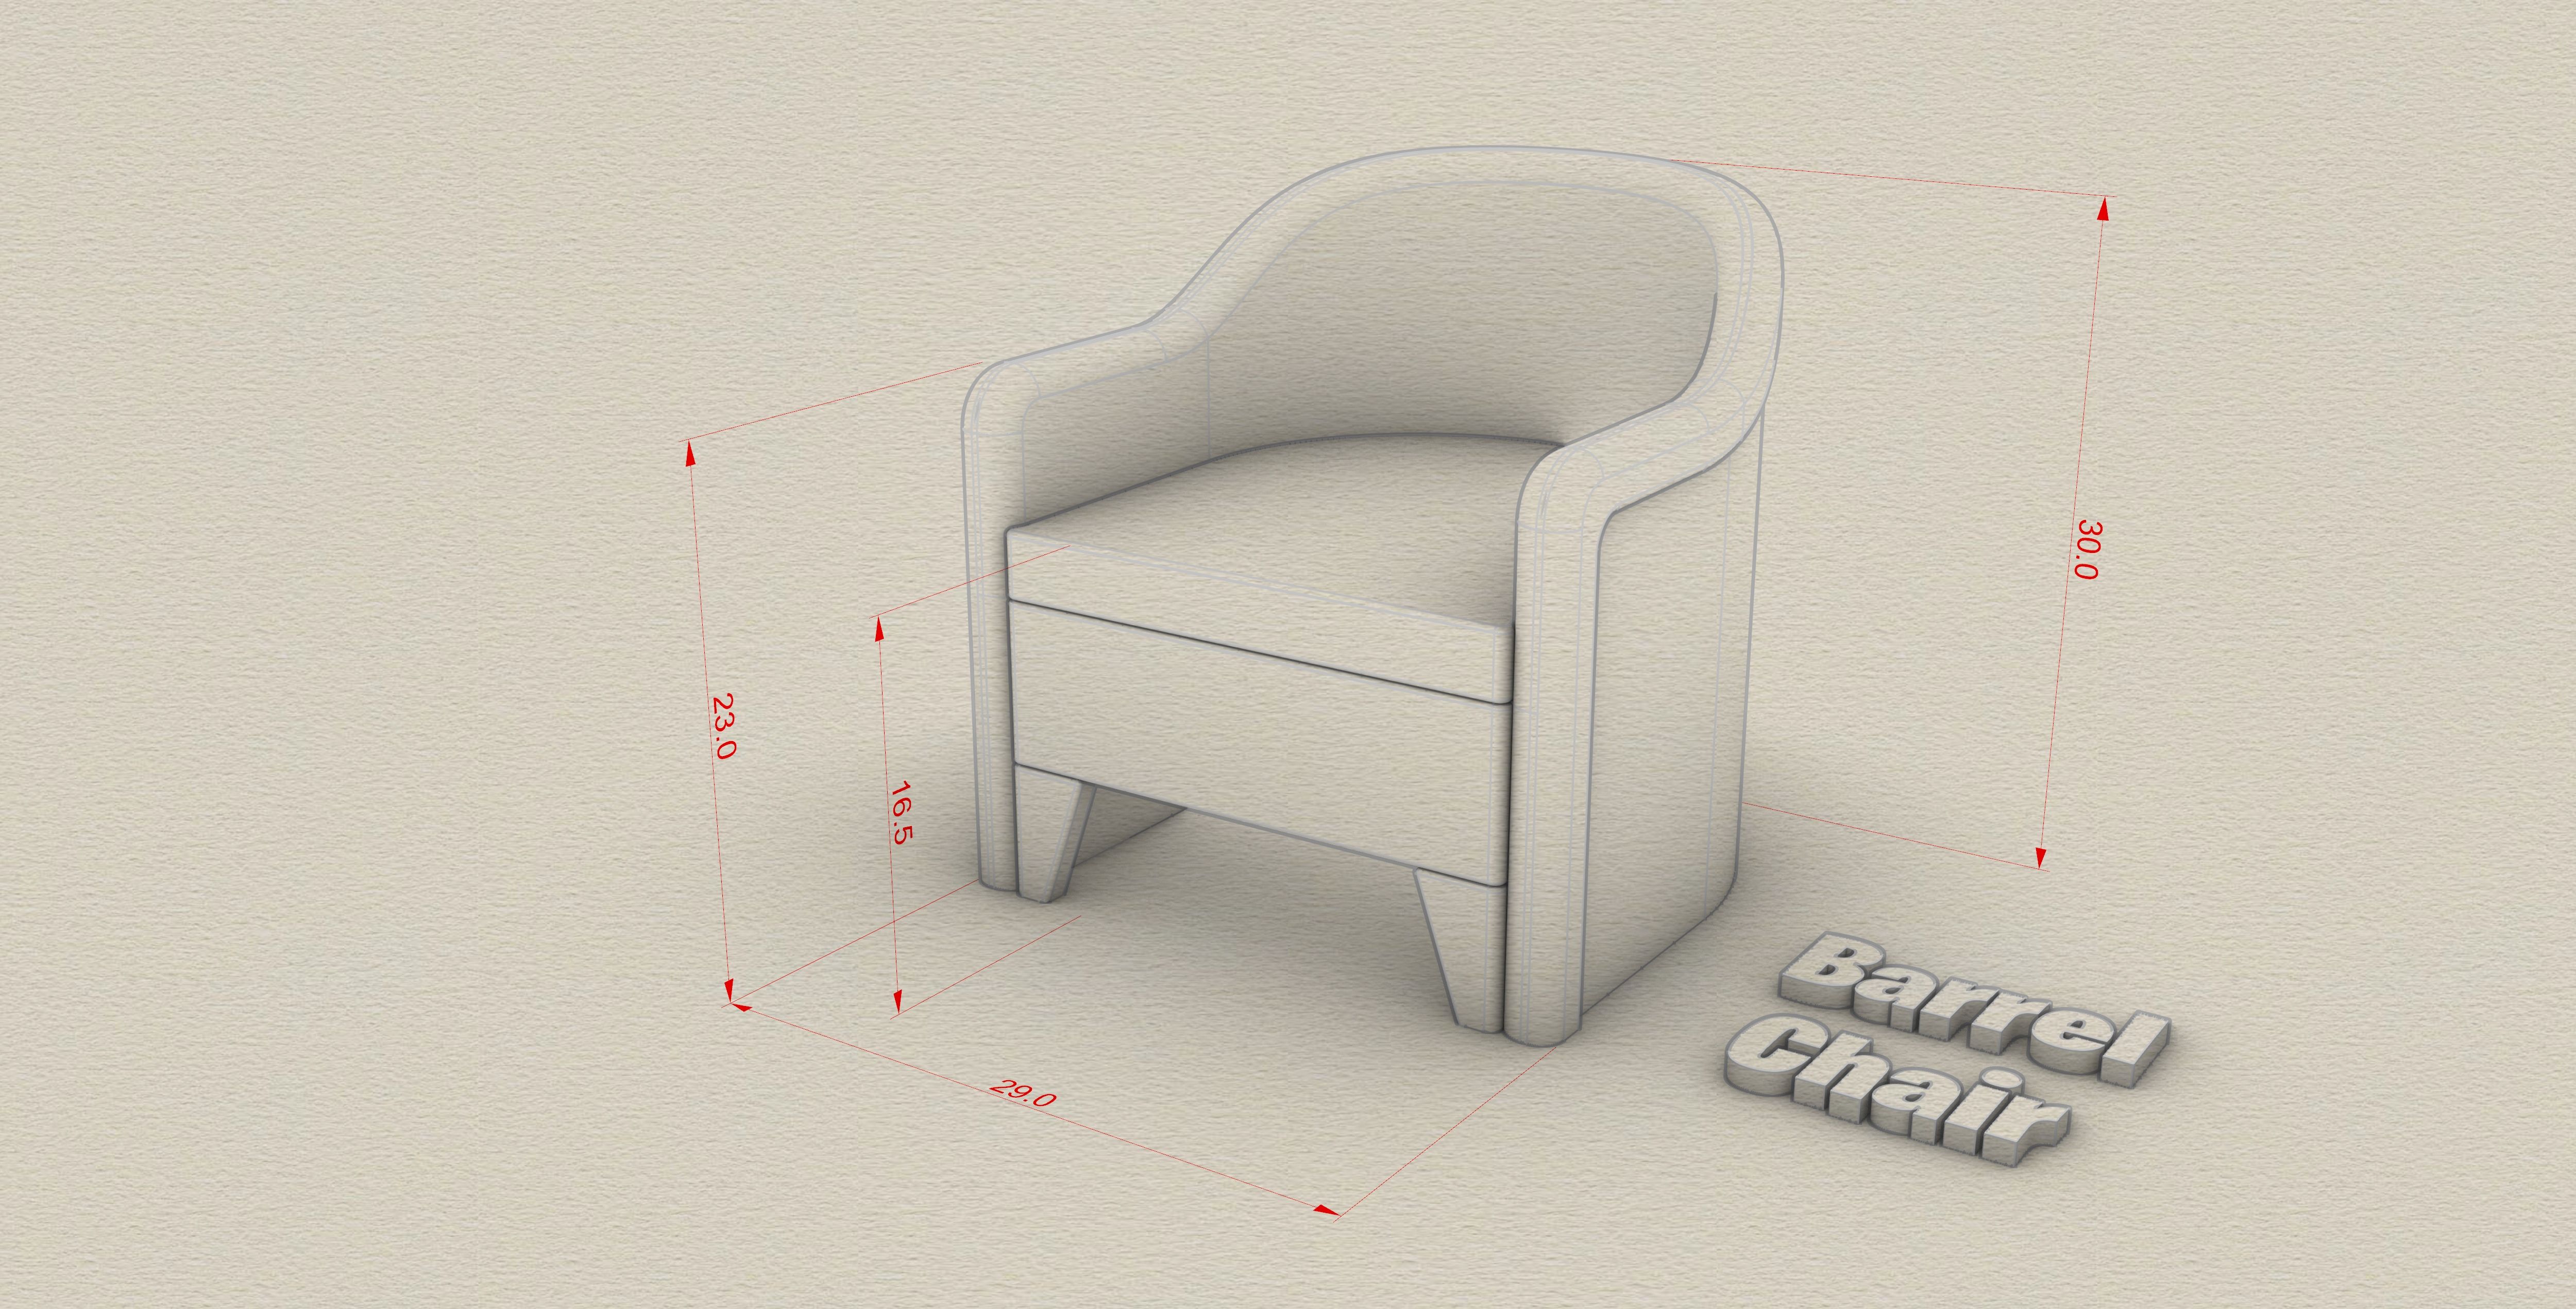 nightclub barrel chair rendering with measurements 